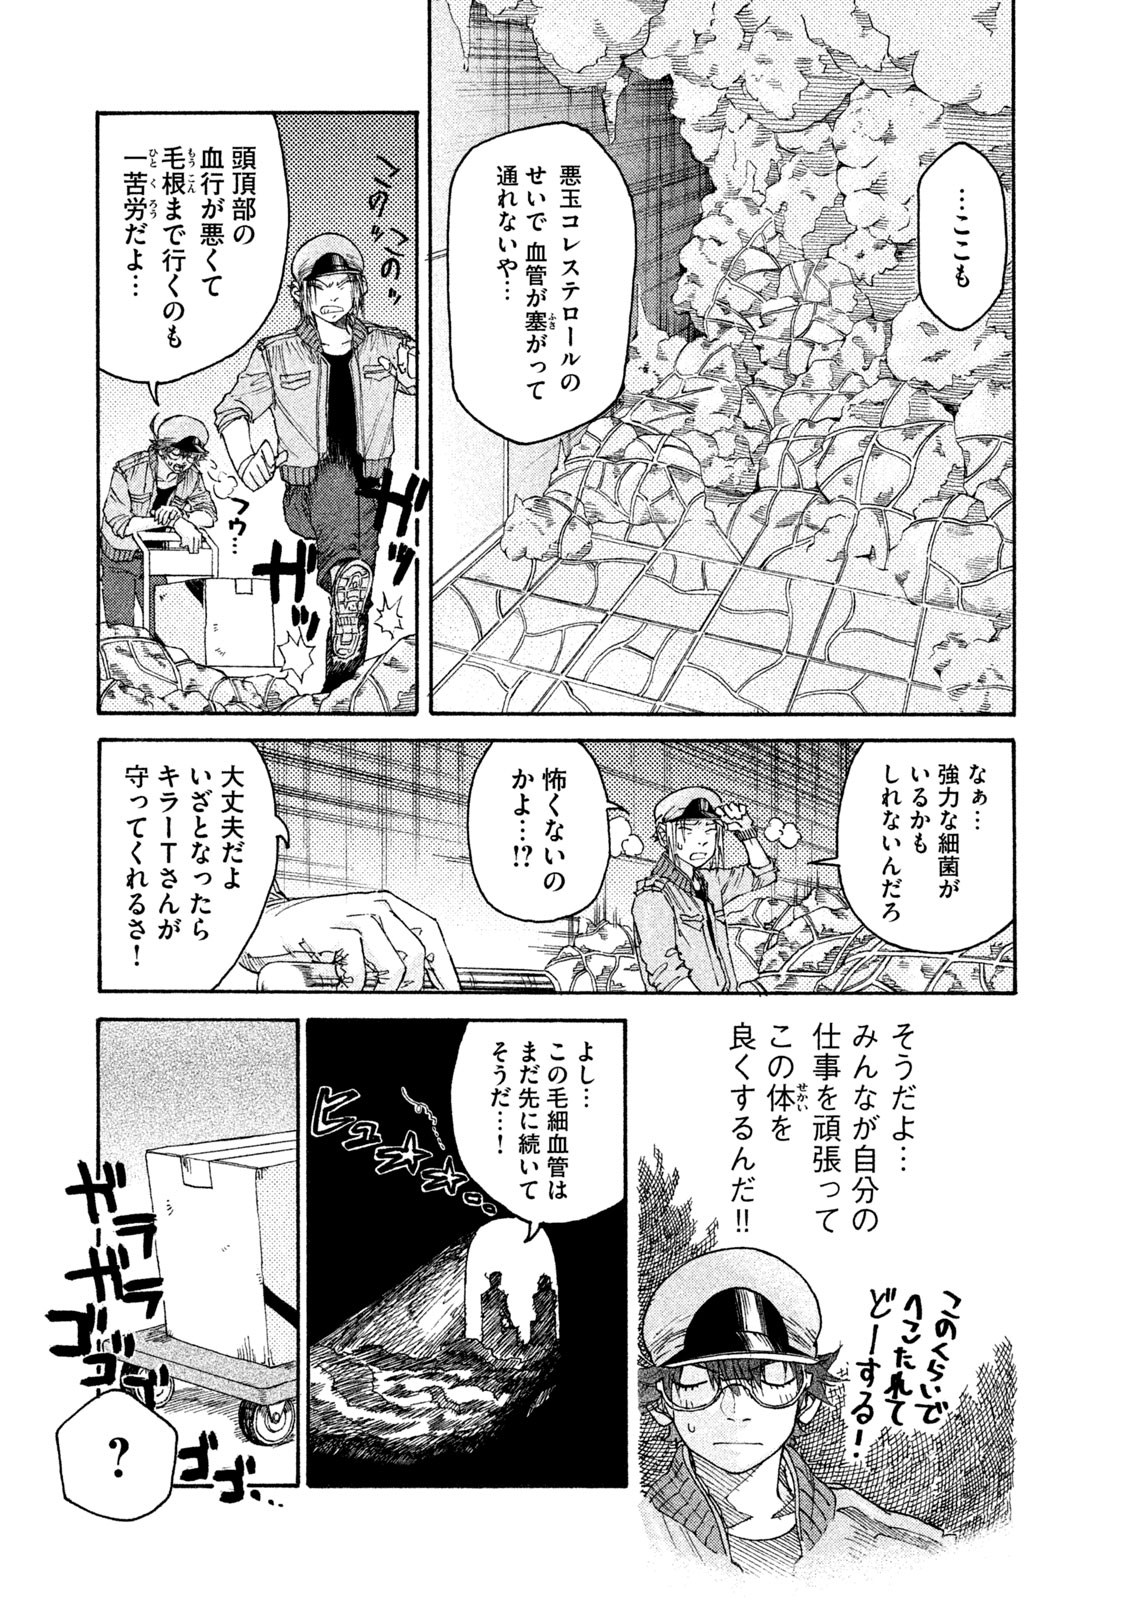 Hataraku Saibou BLACK - Chapter 5 - Page 7